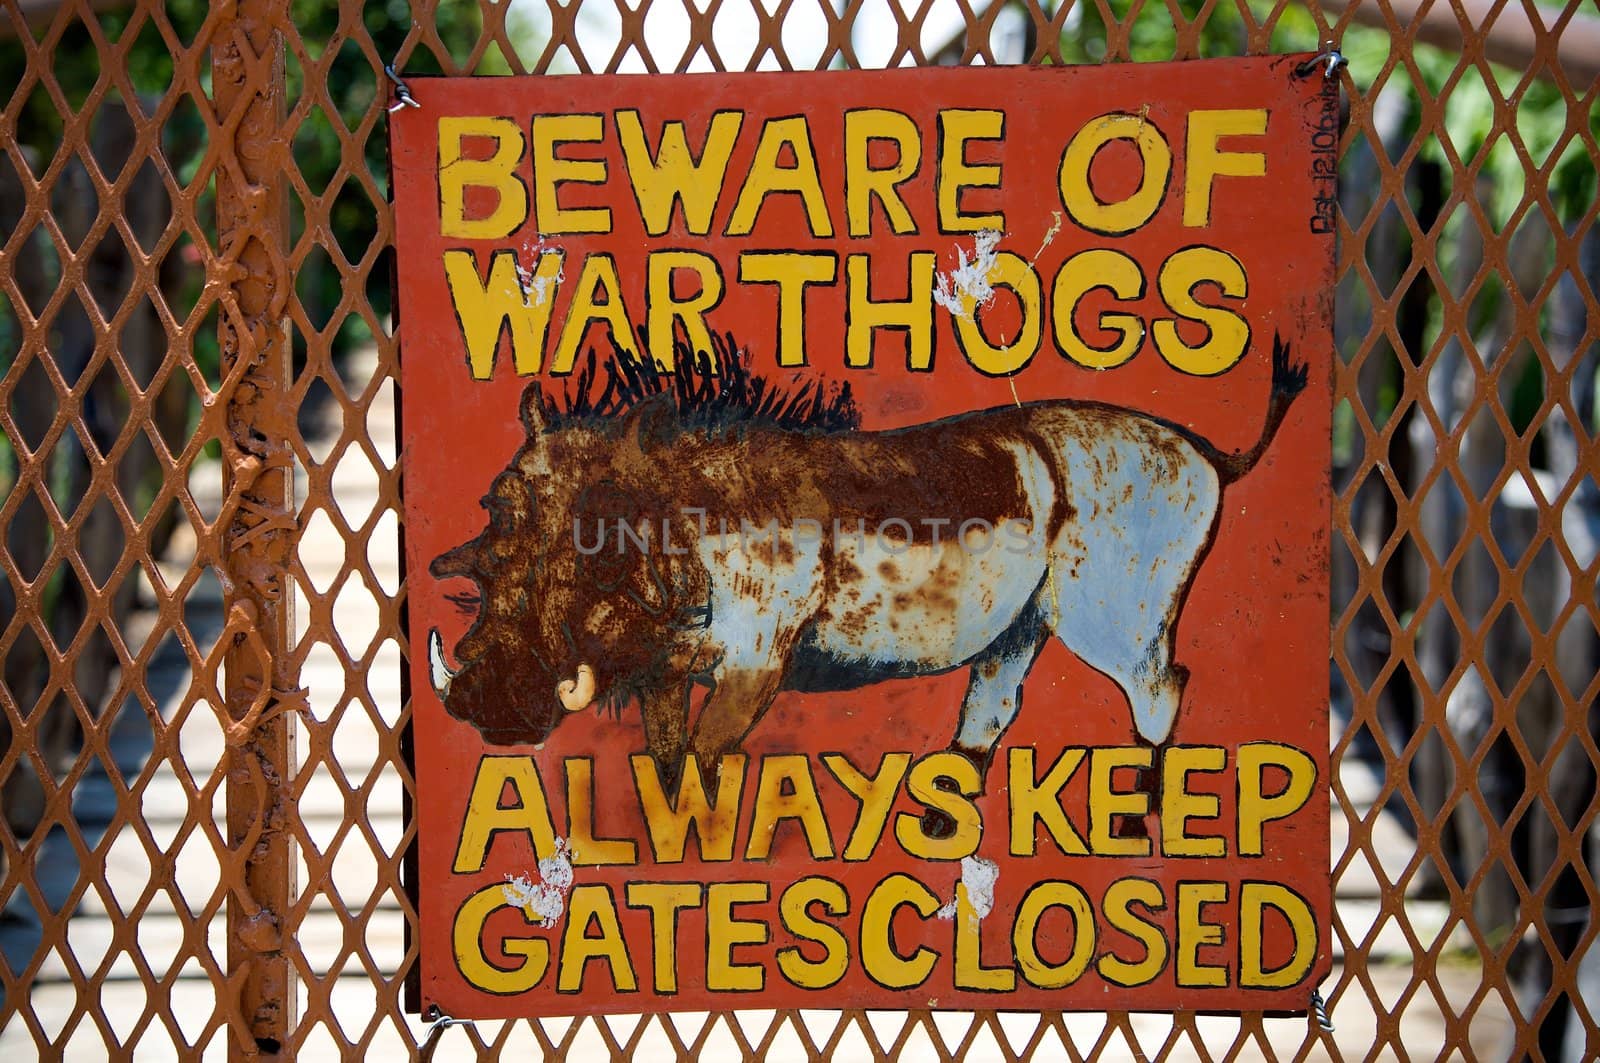 Beware of warthogs by watchtheworld